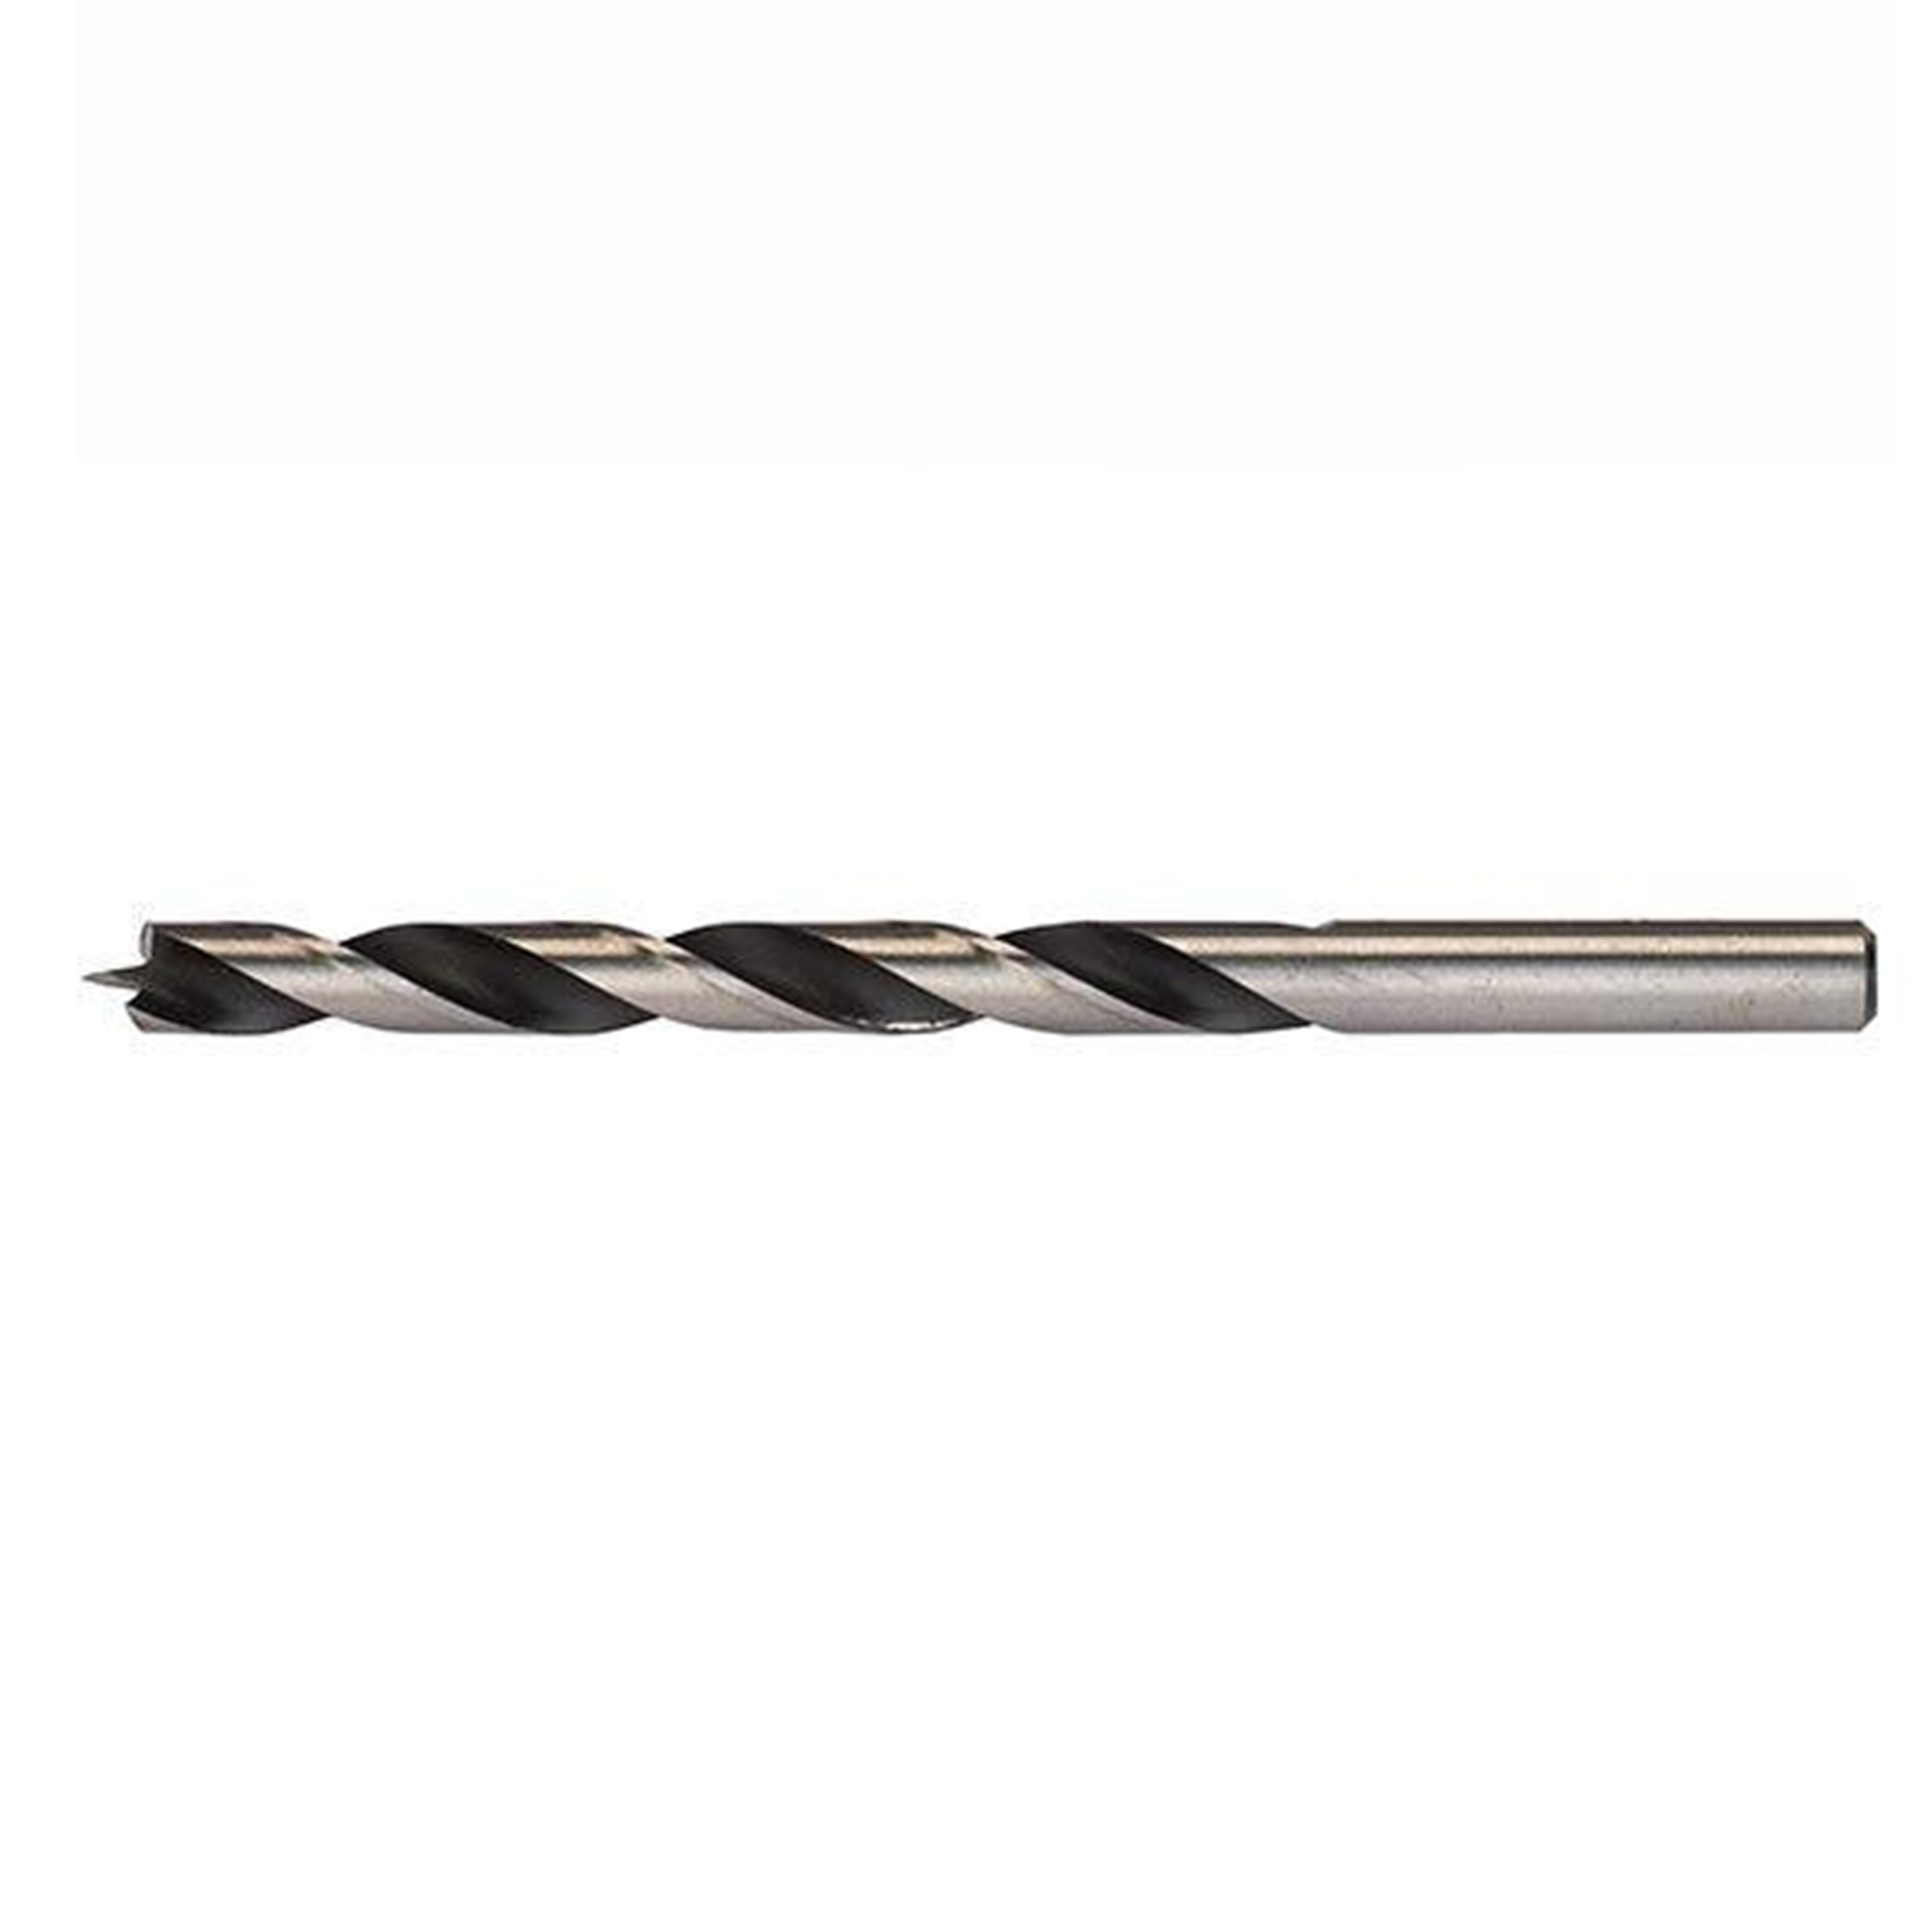 9/32-inch Chrome-vanadium Steel Brad Point Drill Bit